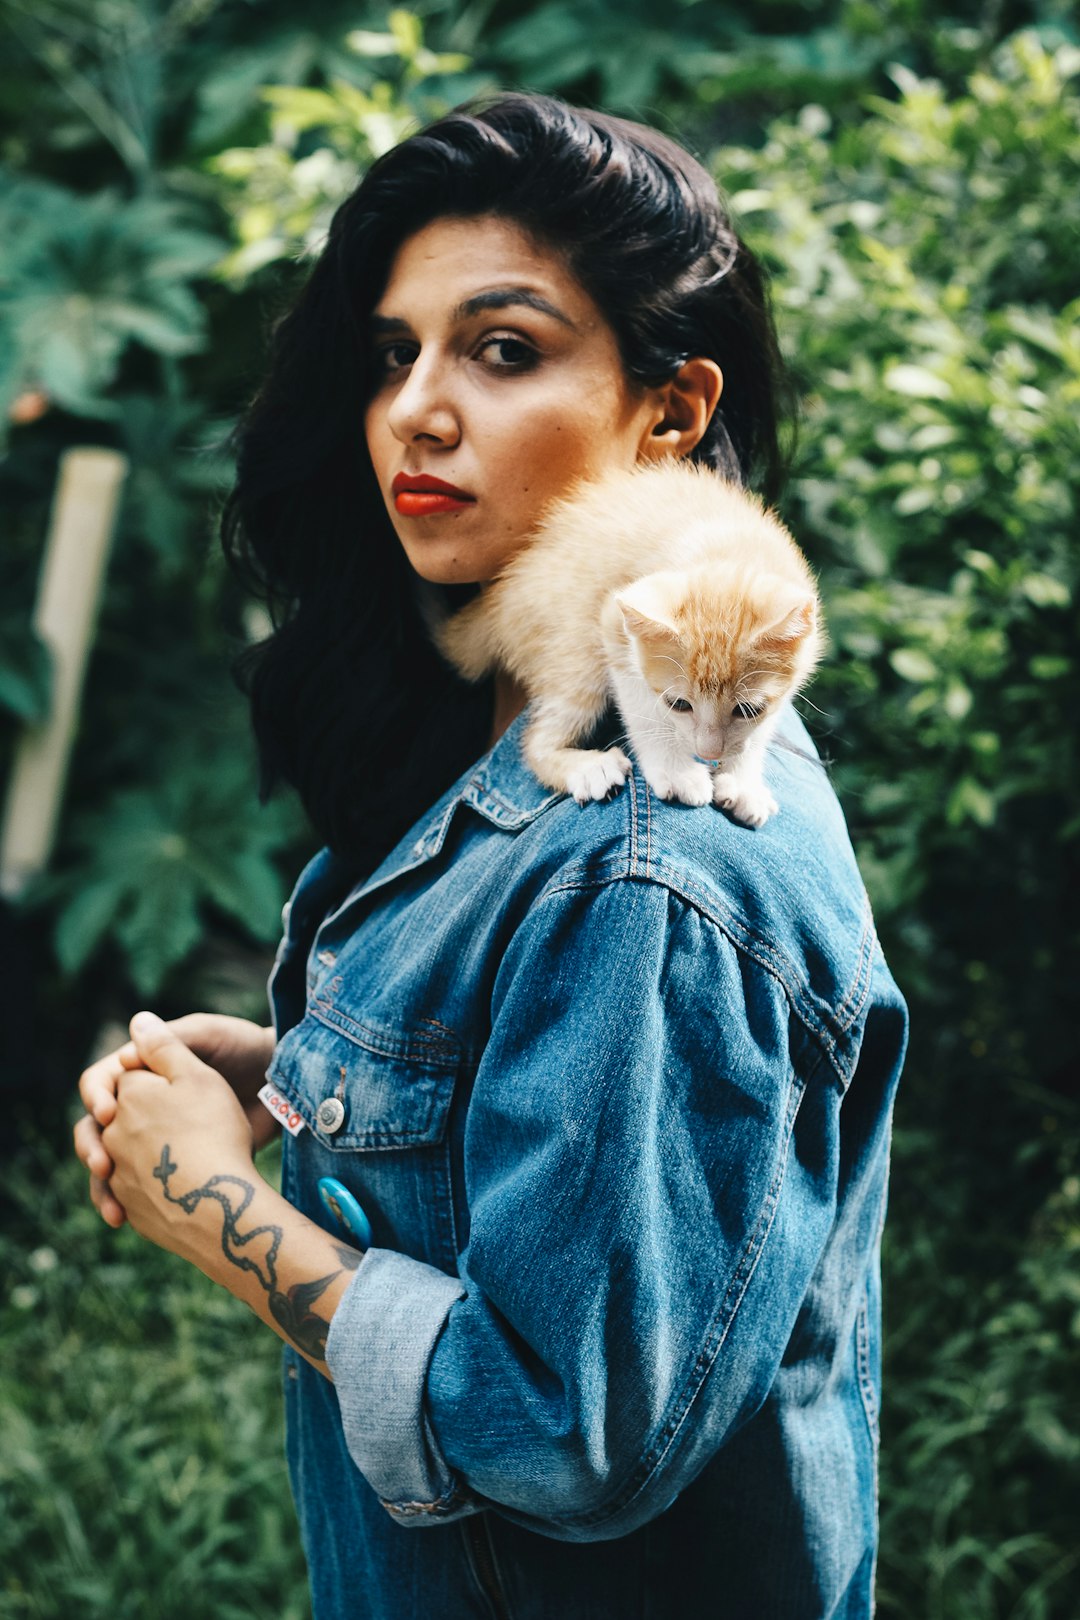 orange kitten on woman's shoulder during daytime